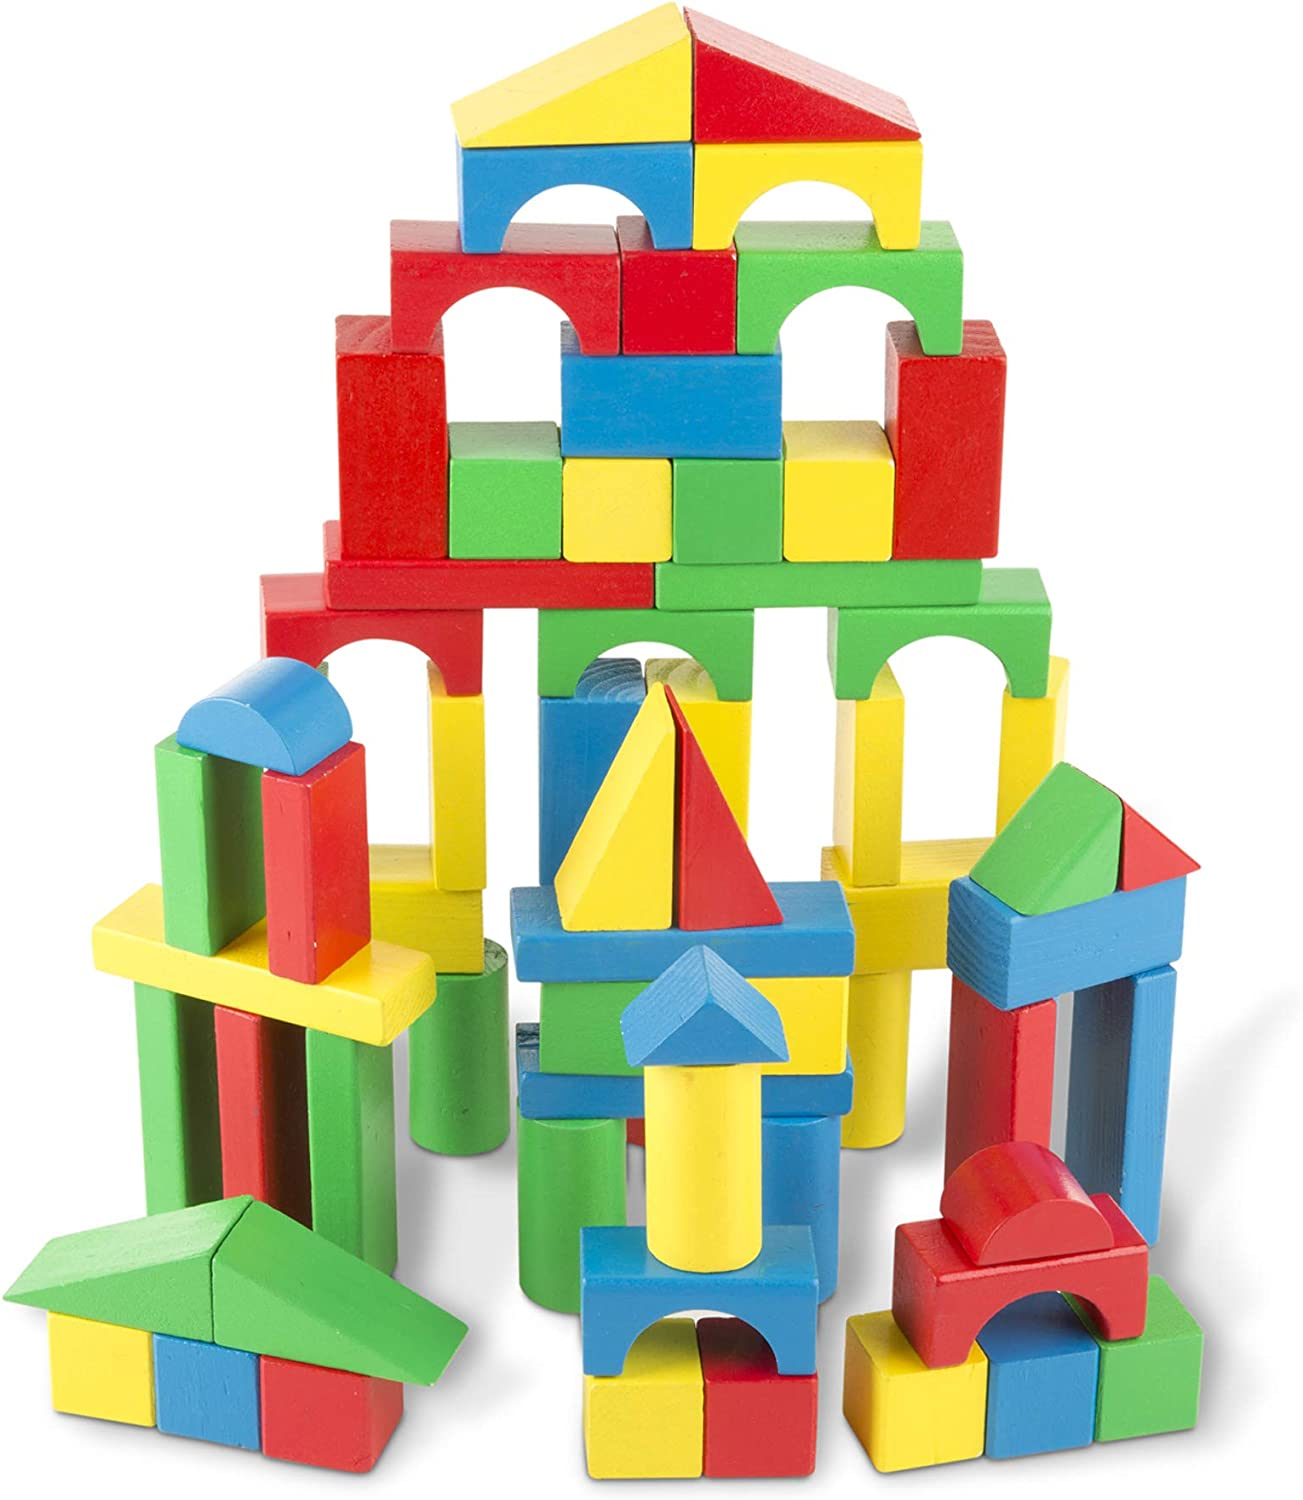 Melissa & Doug Wooden Building Blocks Set - 100 Blocks in 4 Colors and 9 Shapes $10.70